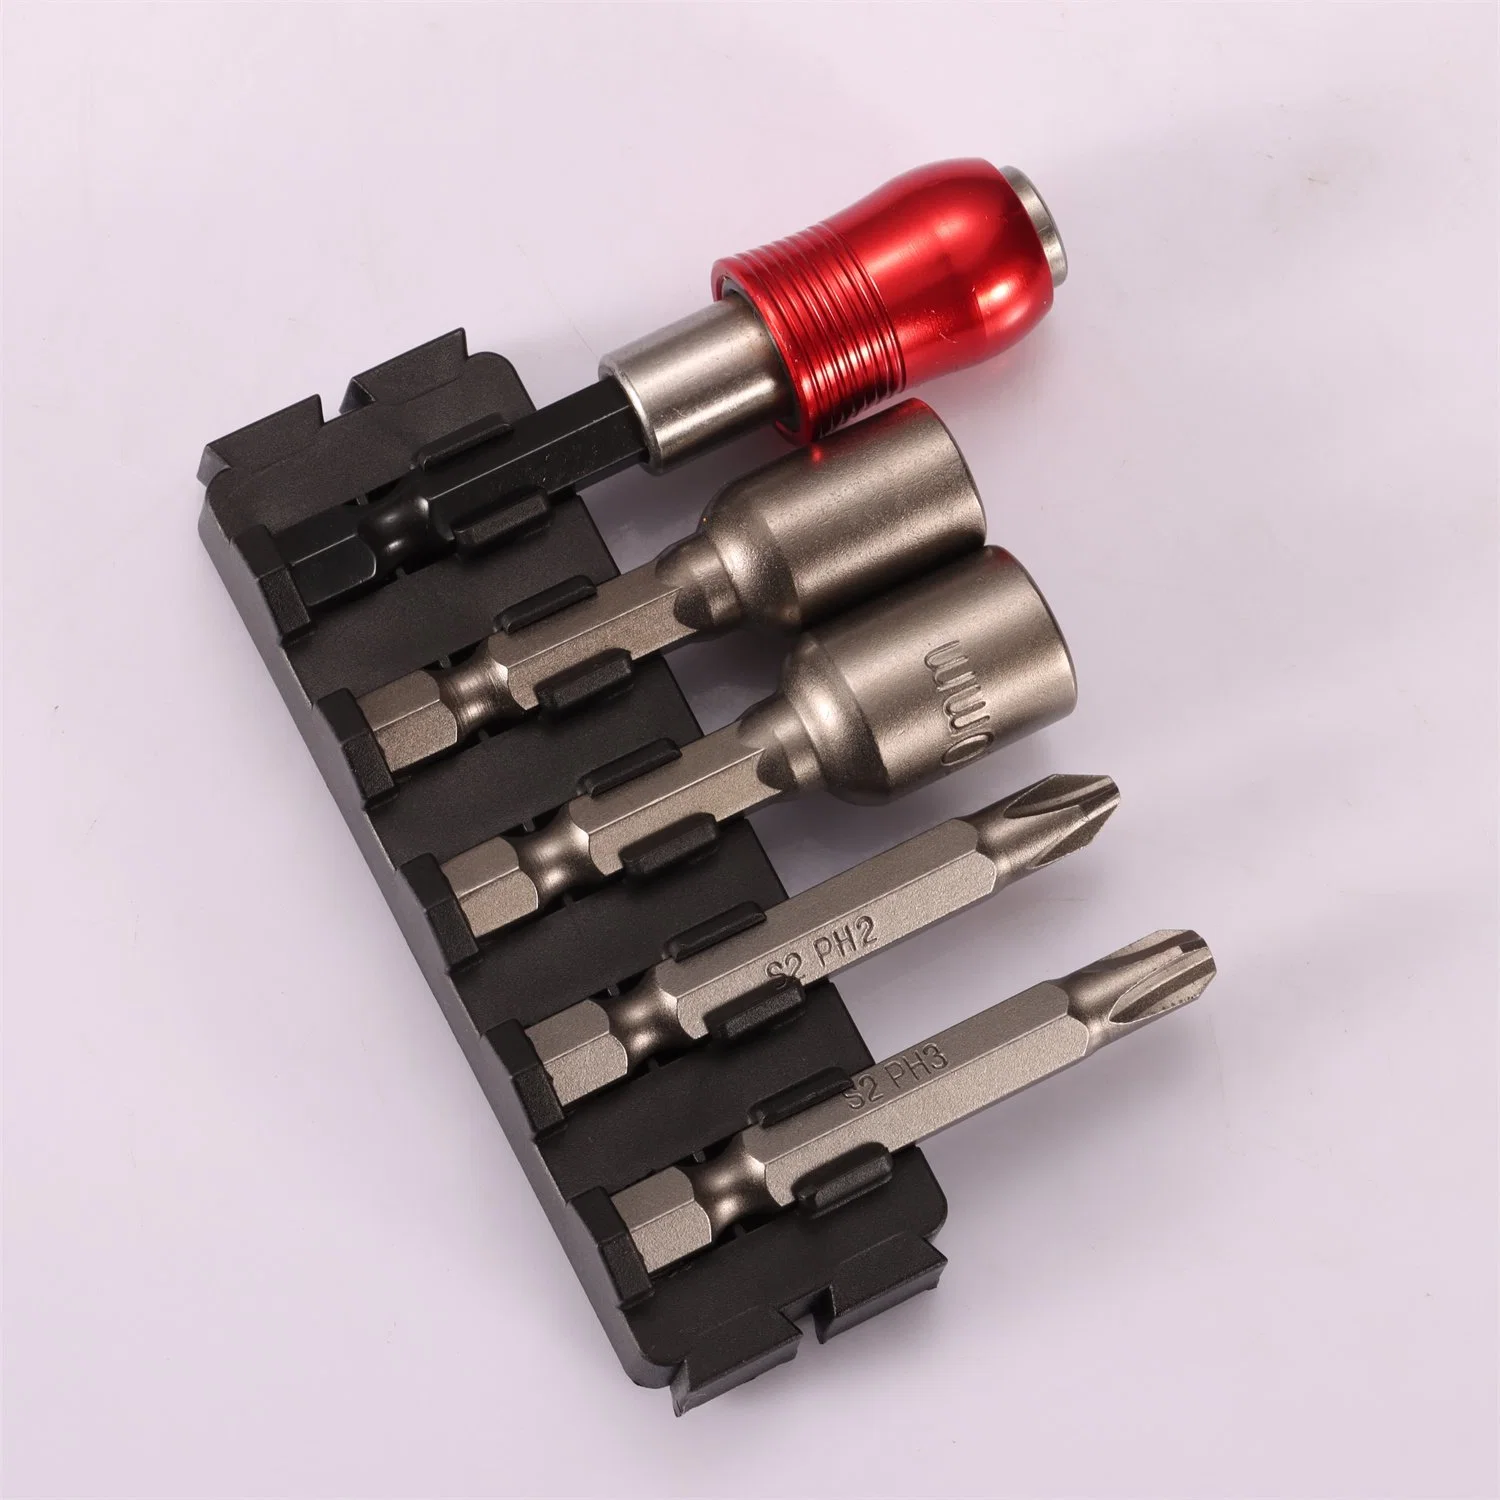 Magnetic Precision Screwdriver Bit Set Power Screwdriver Tools